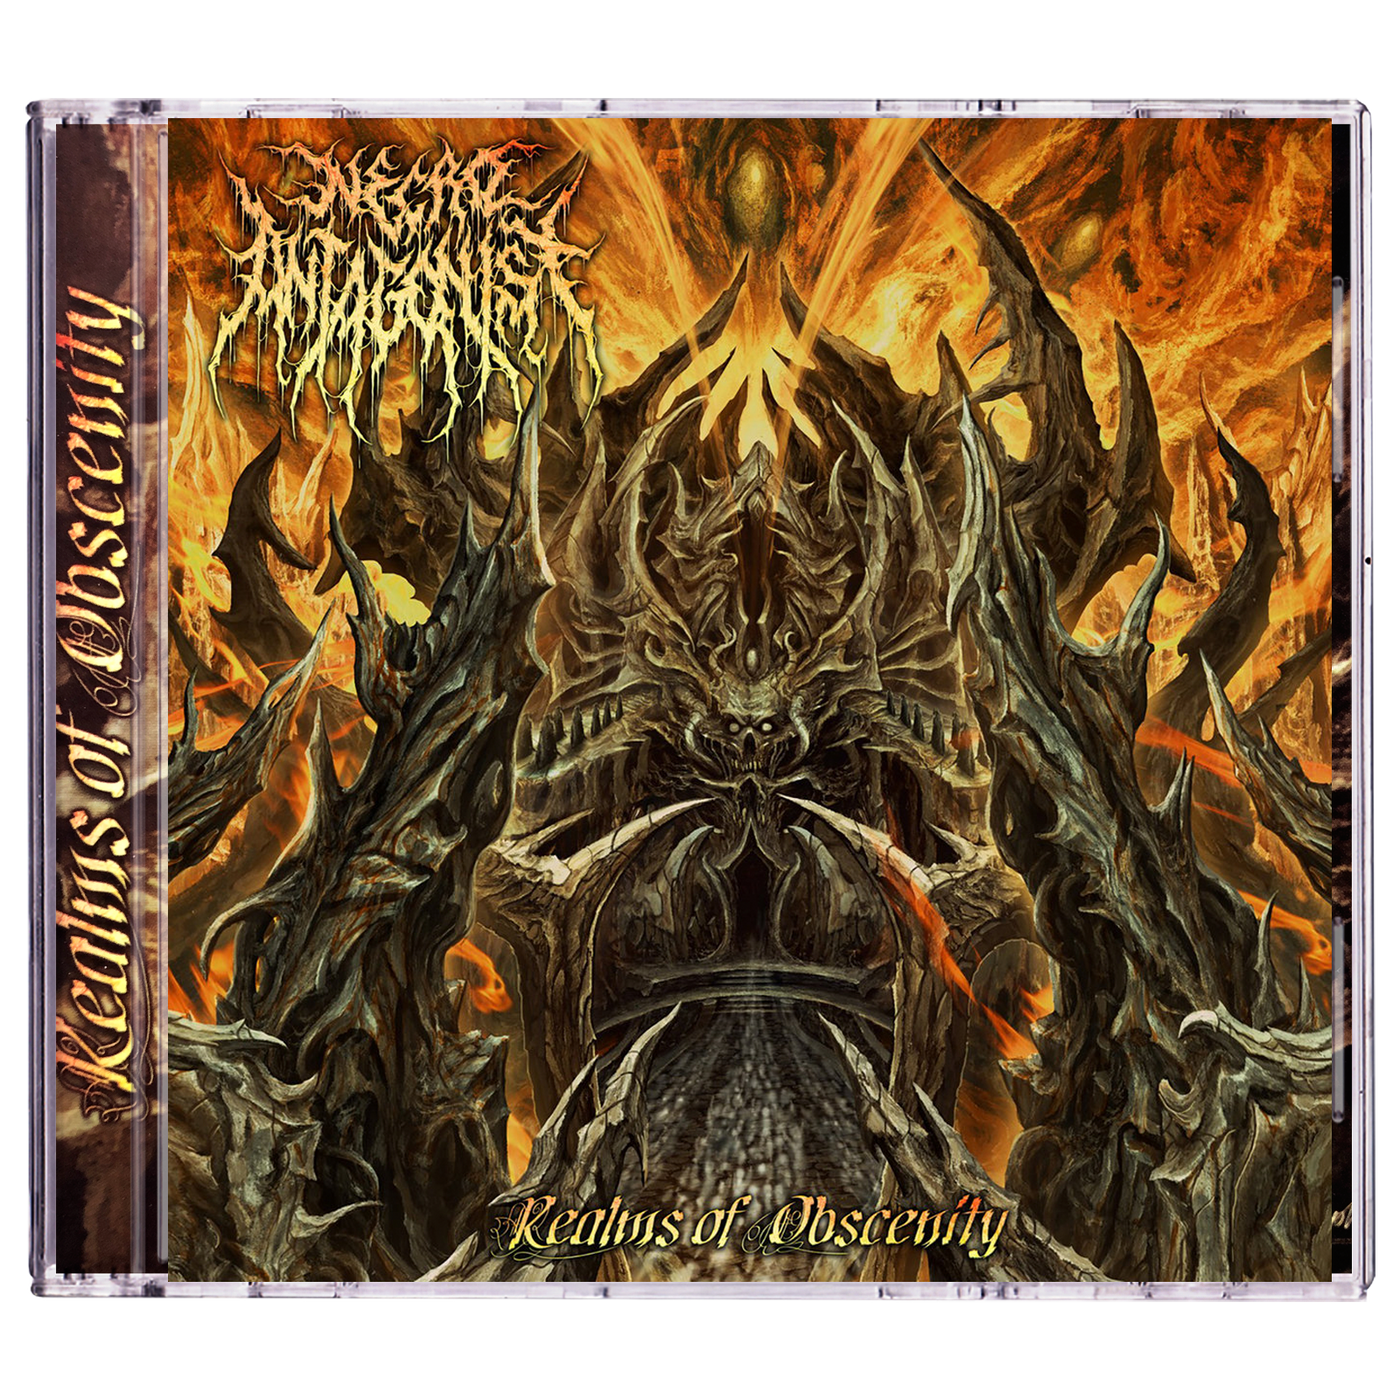 Necro Antagonist 'Realms Of Obscenity' CD